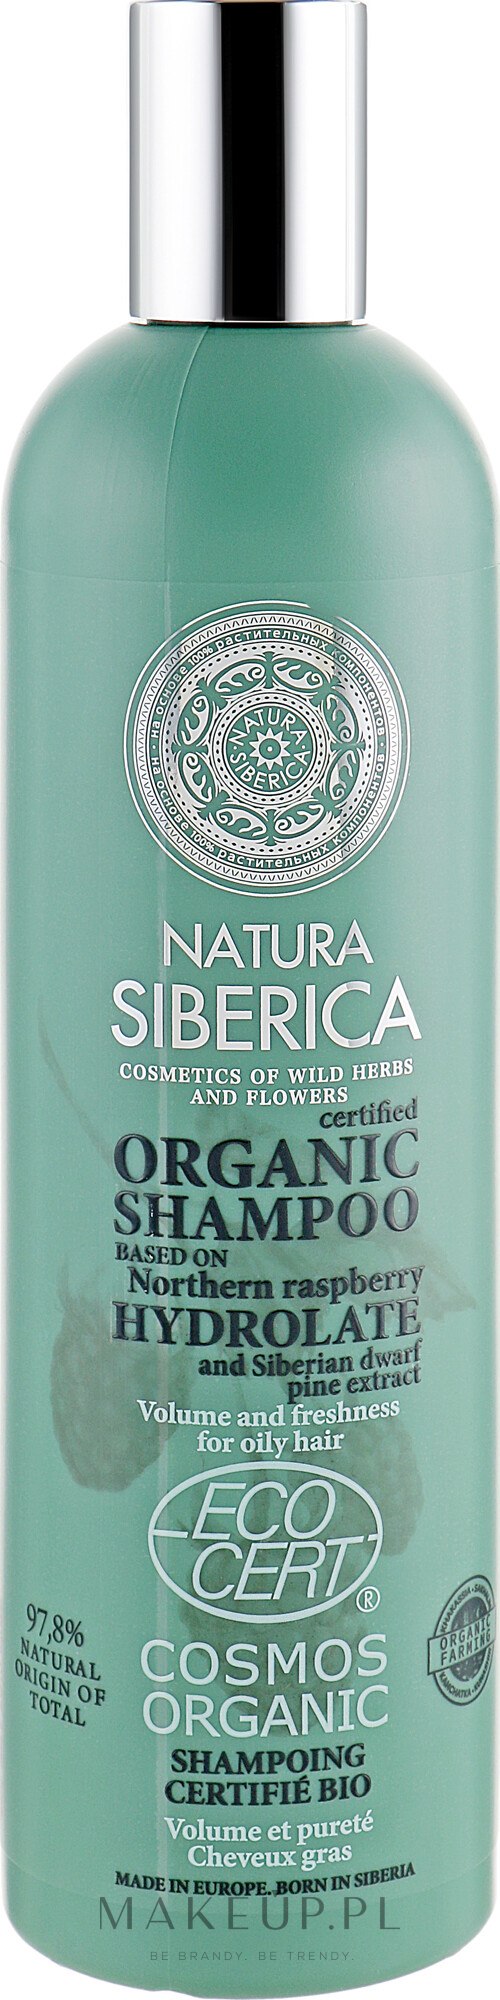 wizaz kwc natura siberca szampon